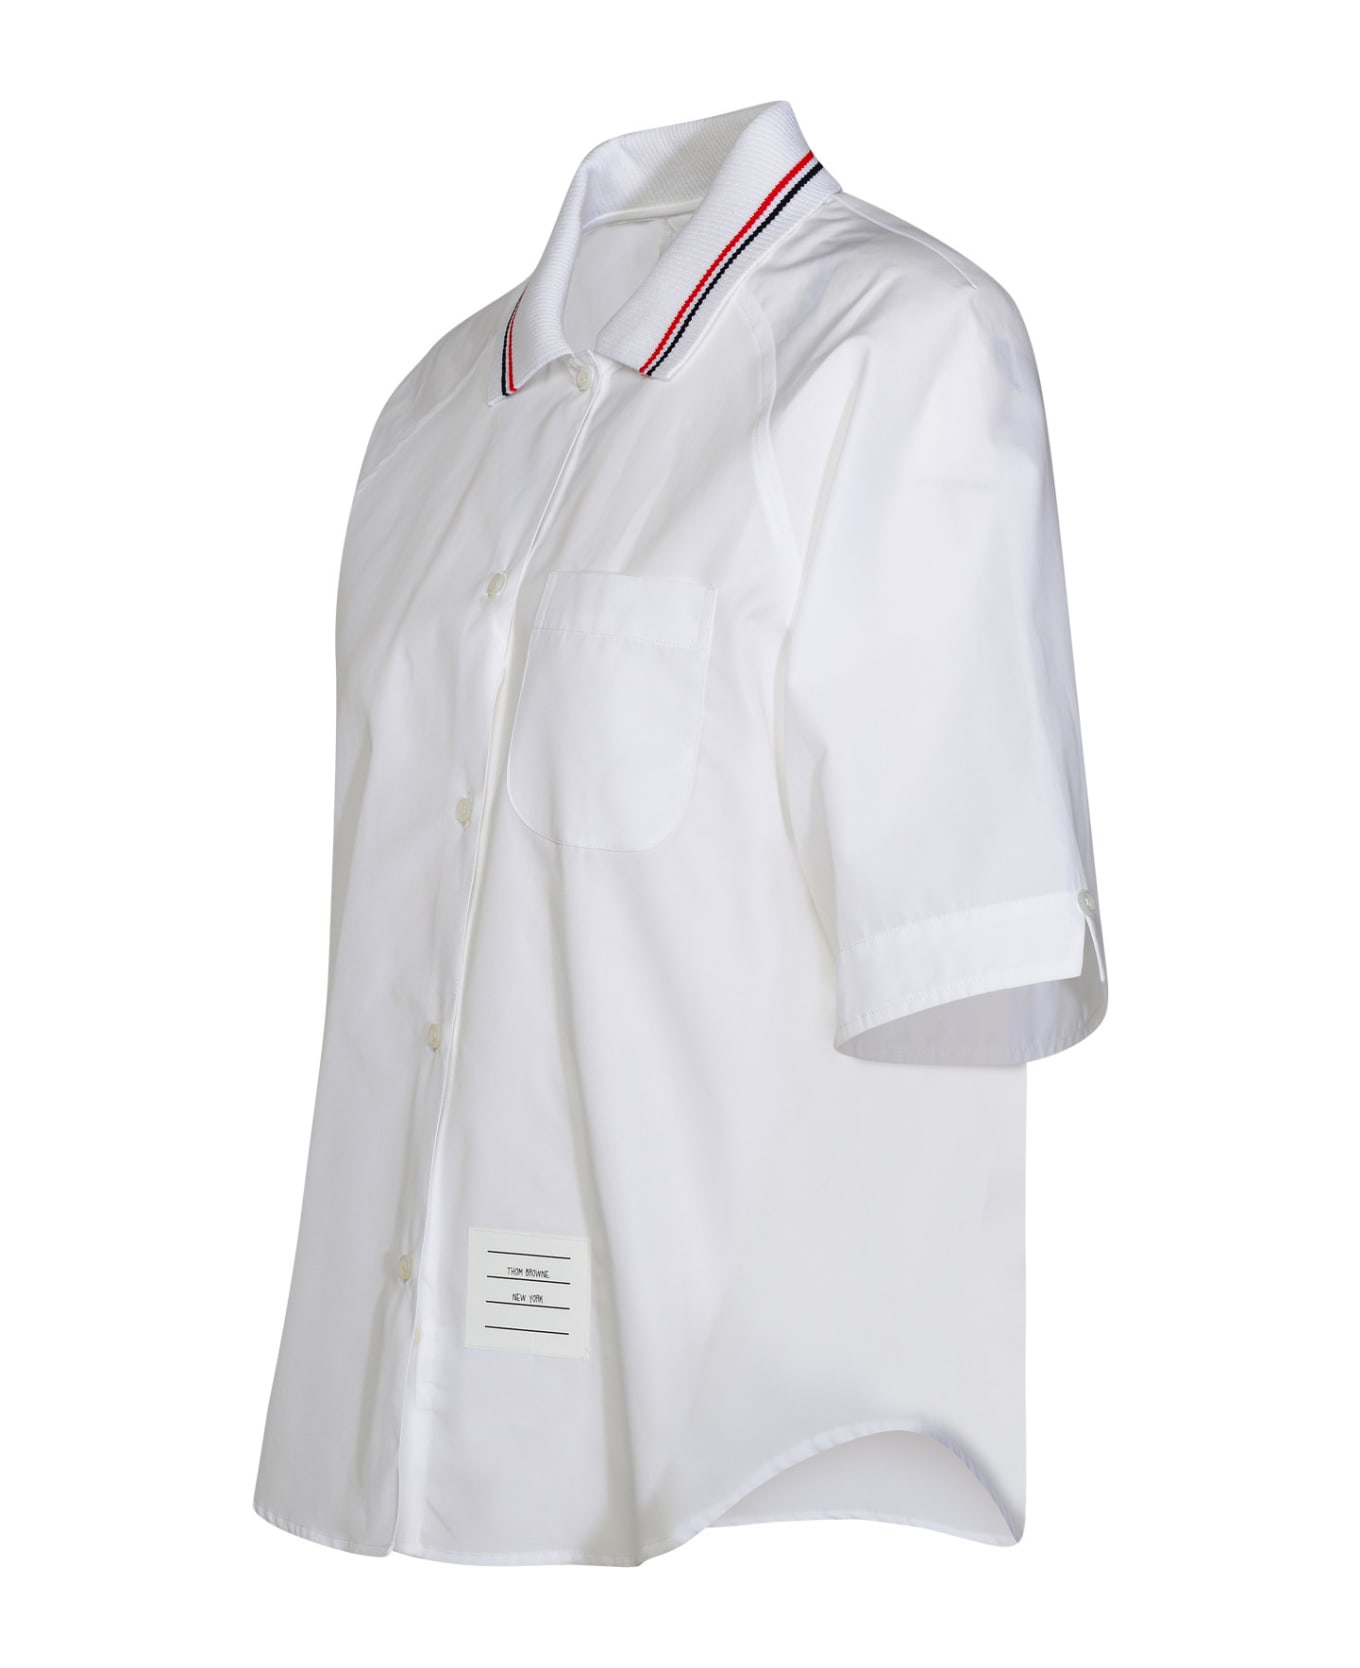 Thom Browne White Cotton Shirt - White